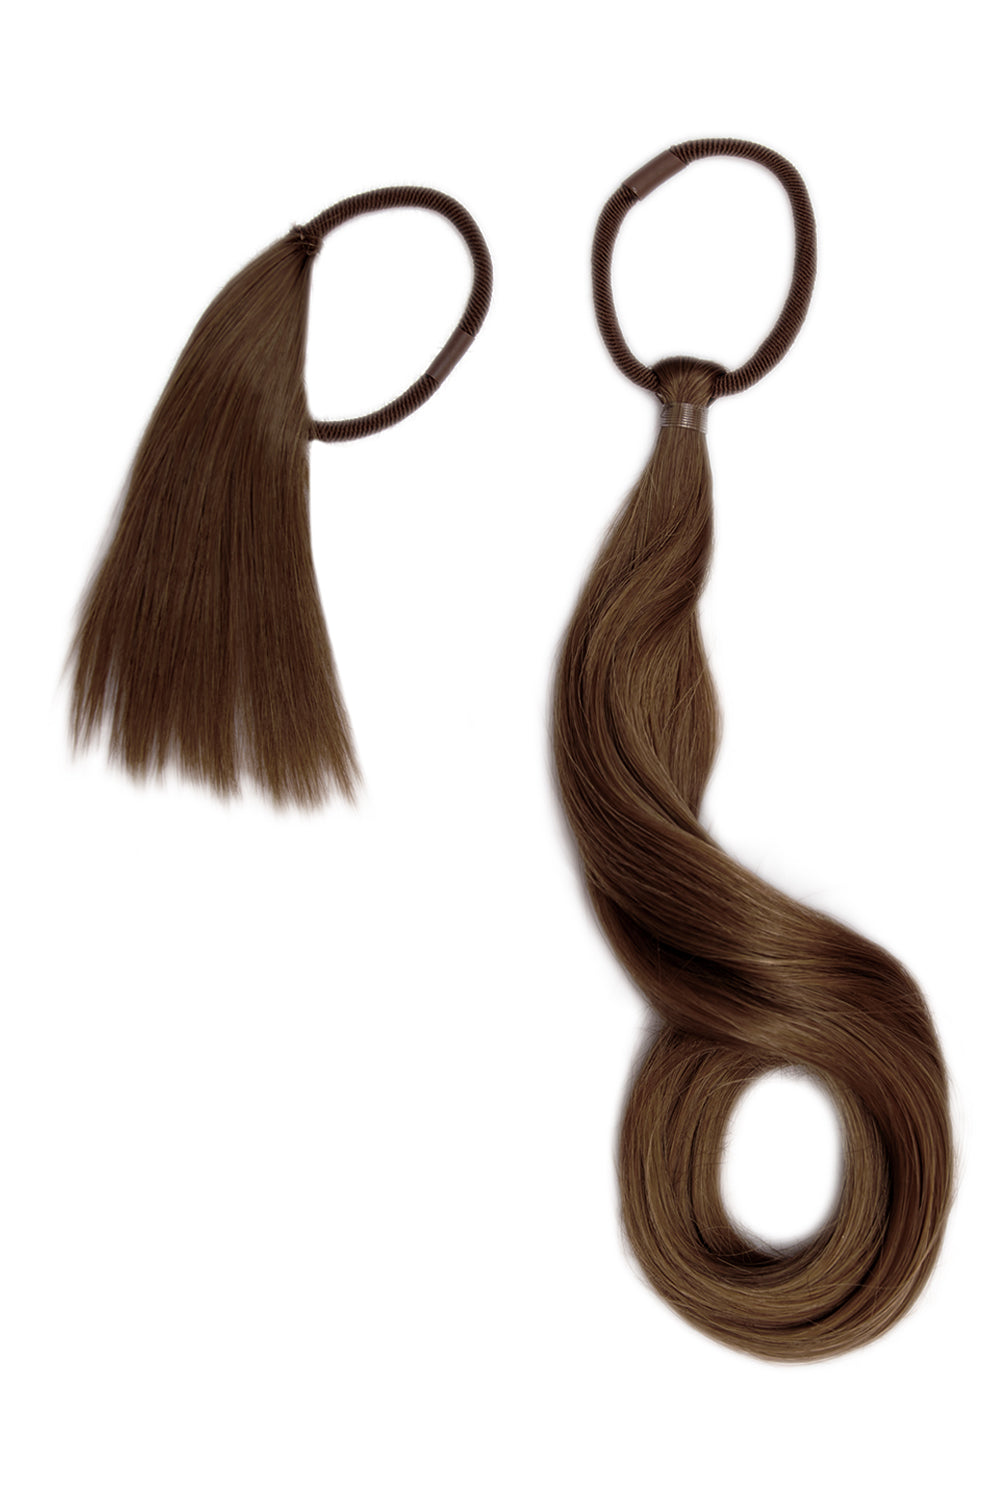 Feathered Bun Booster - Chestnut Festival Hair Inspiration